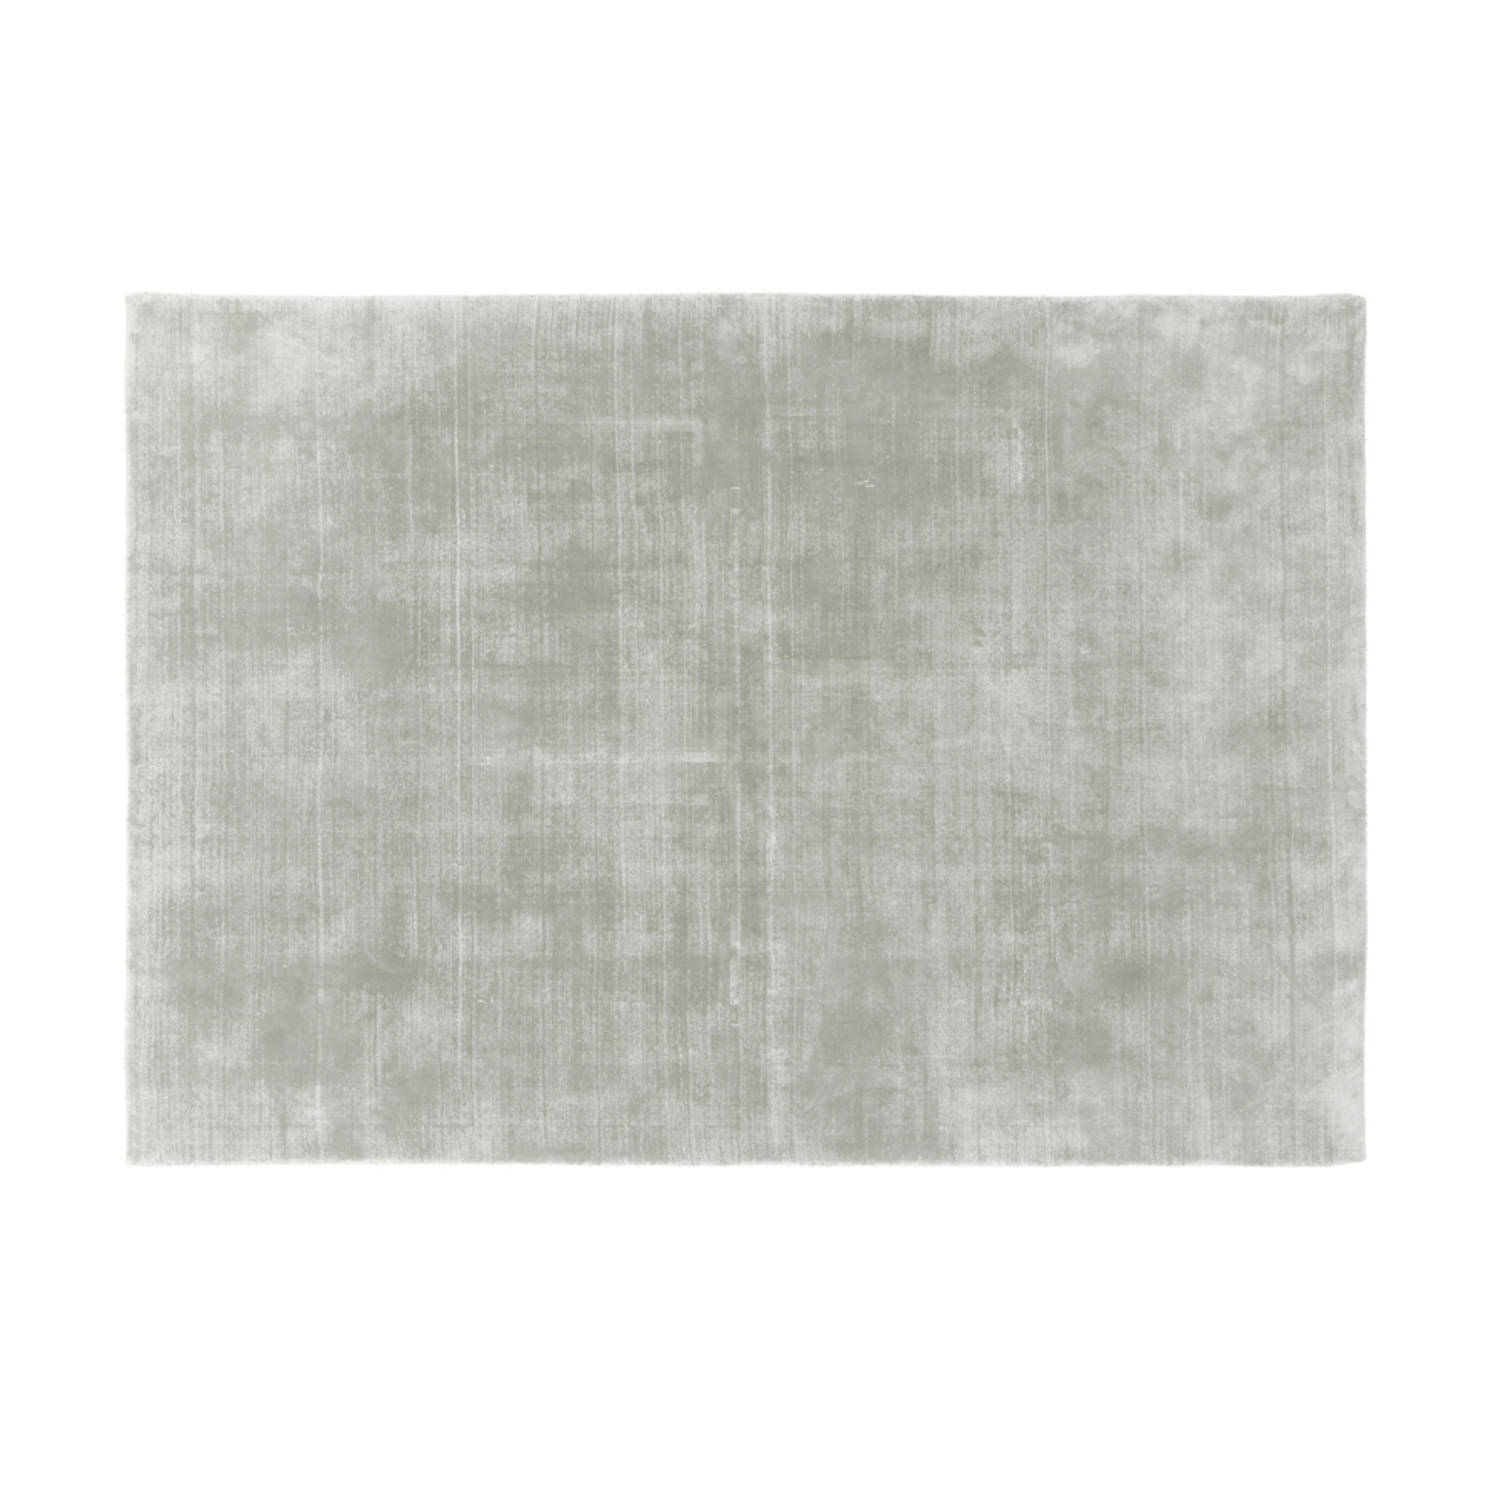 Vloerkleed Batul 230x160cm zilver-grijs Light & Living